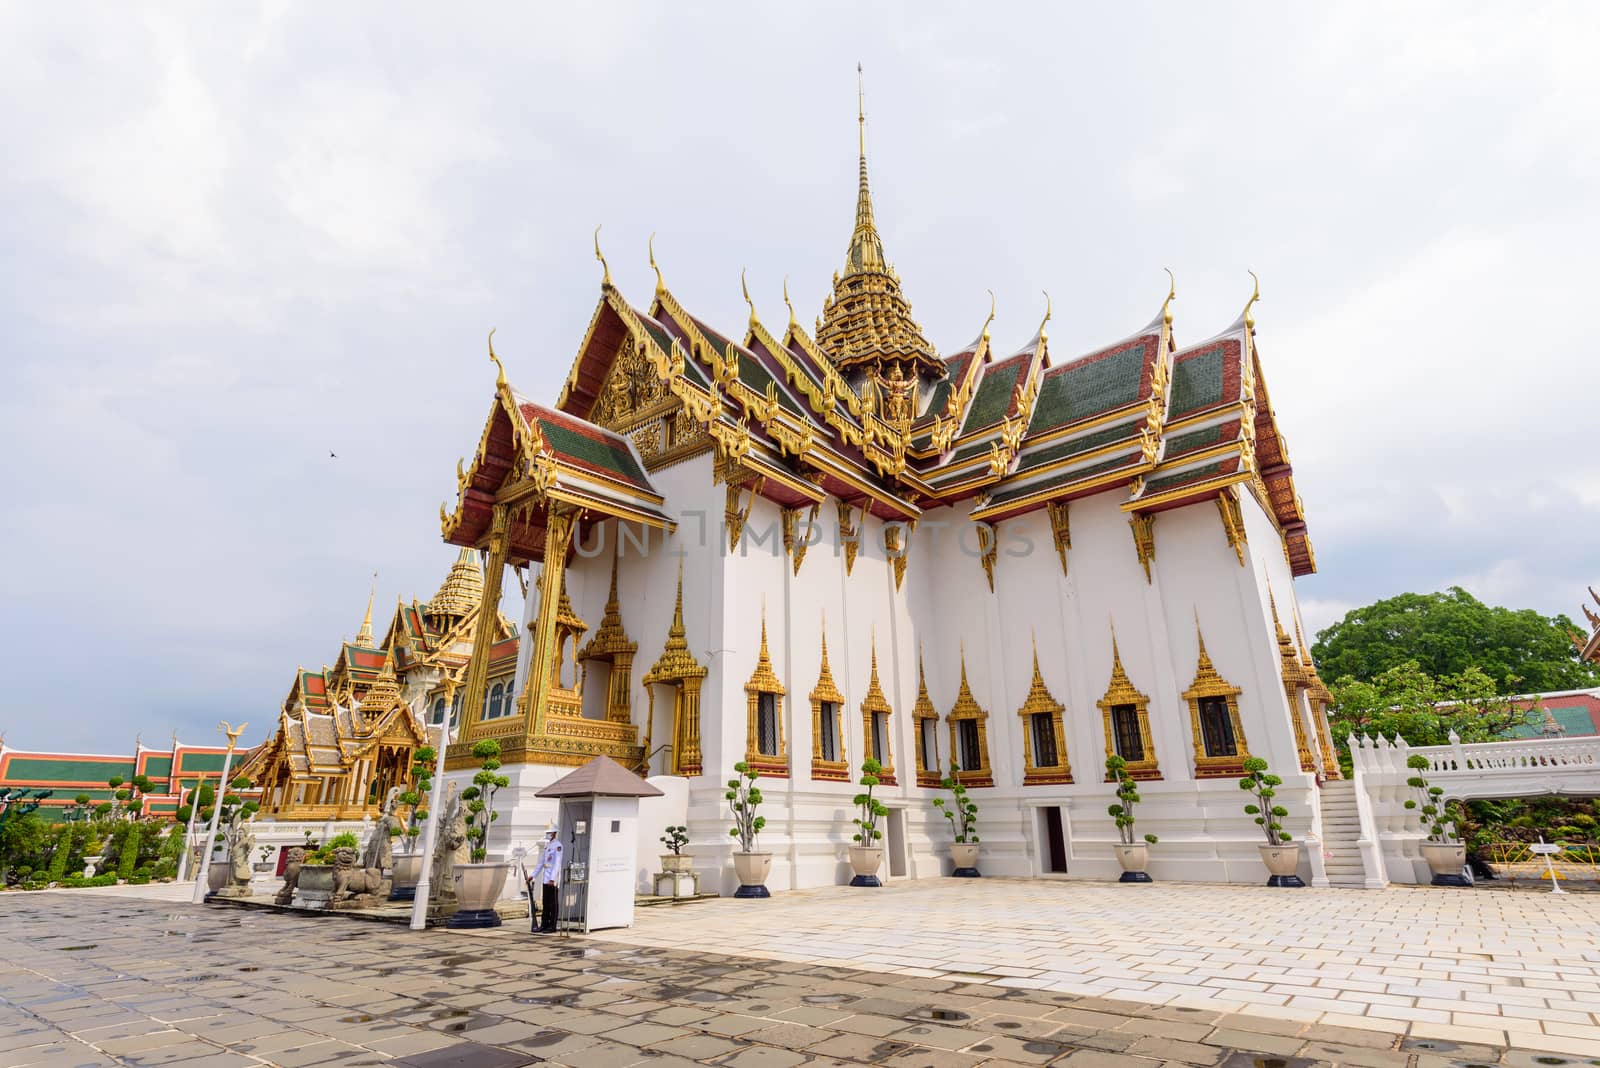 Bangkok, Thailand - 16 September, 2020: Beautiful Thai Grand Palace with sculpture Thai style